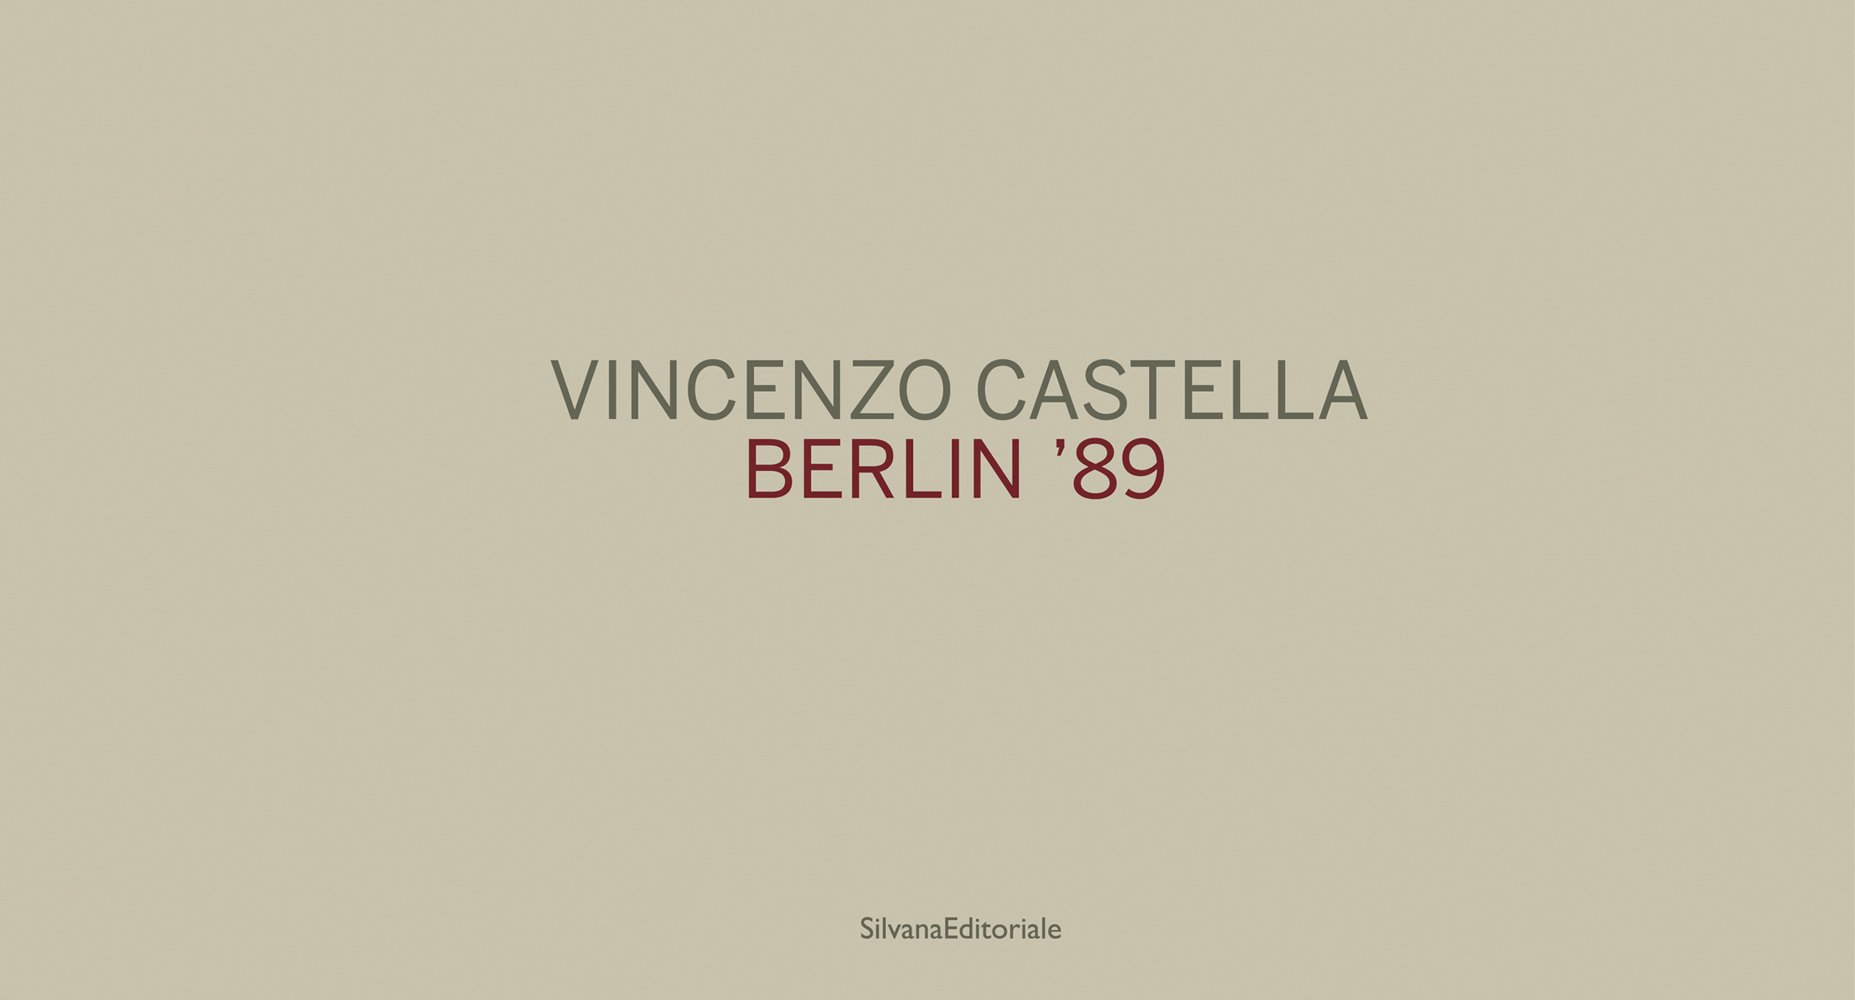 VINCENZO CASTELLA BERLIN '89 in grey and dark red font on beige landscape cover.